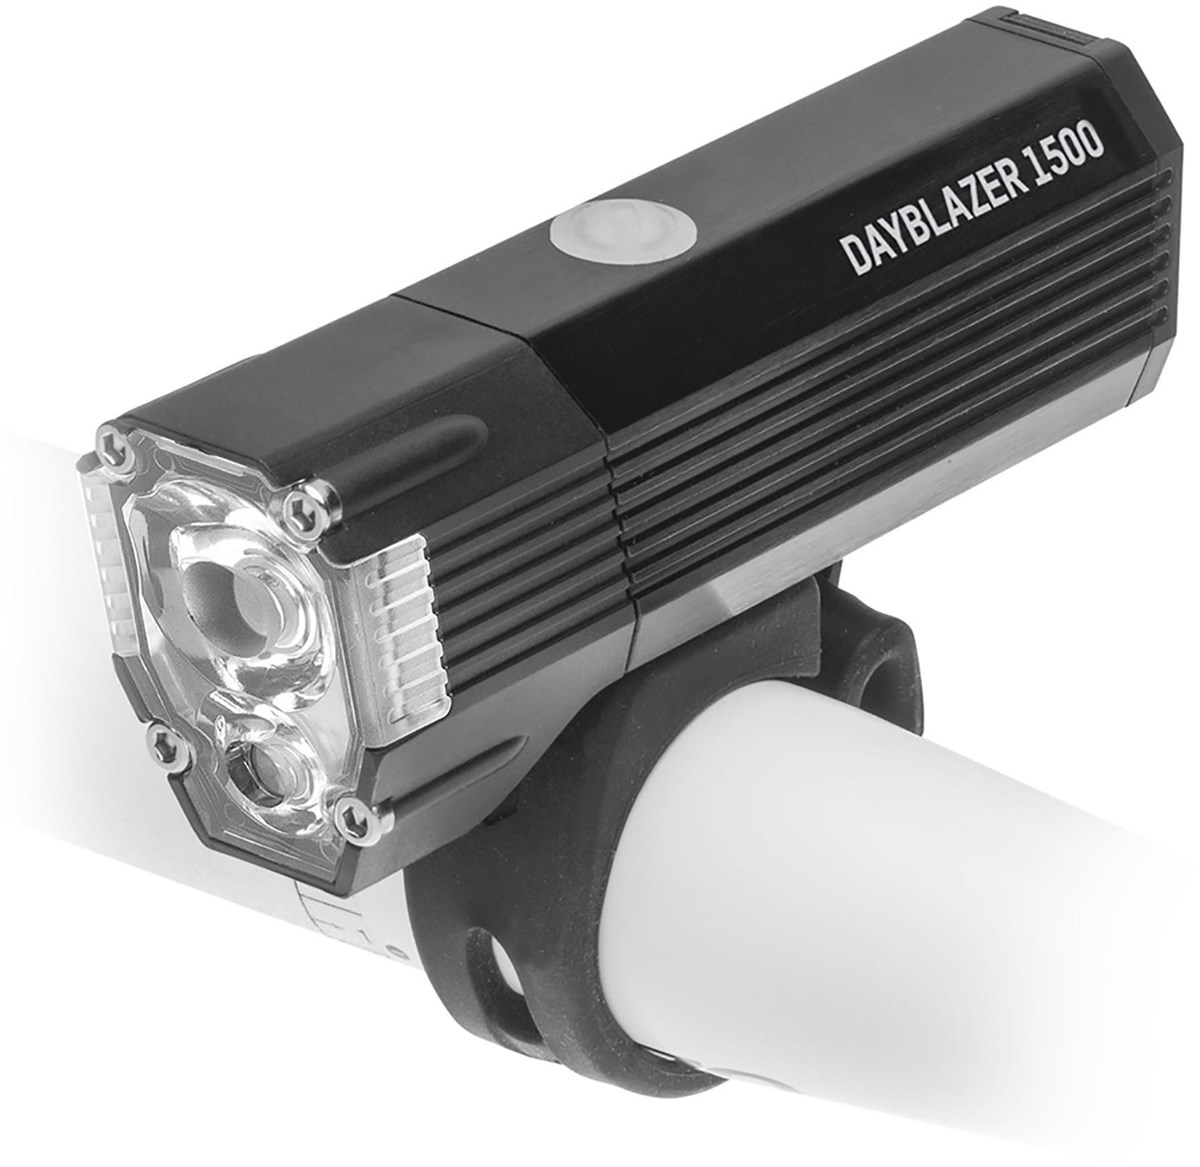 Blackburn Dayblazer 1500 Micro-USB Rechargeable Front Light product image